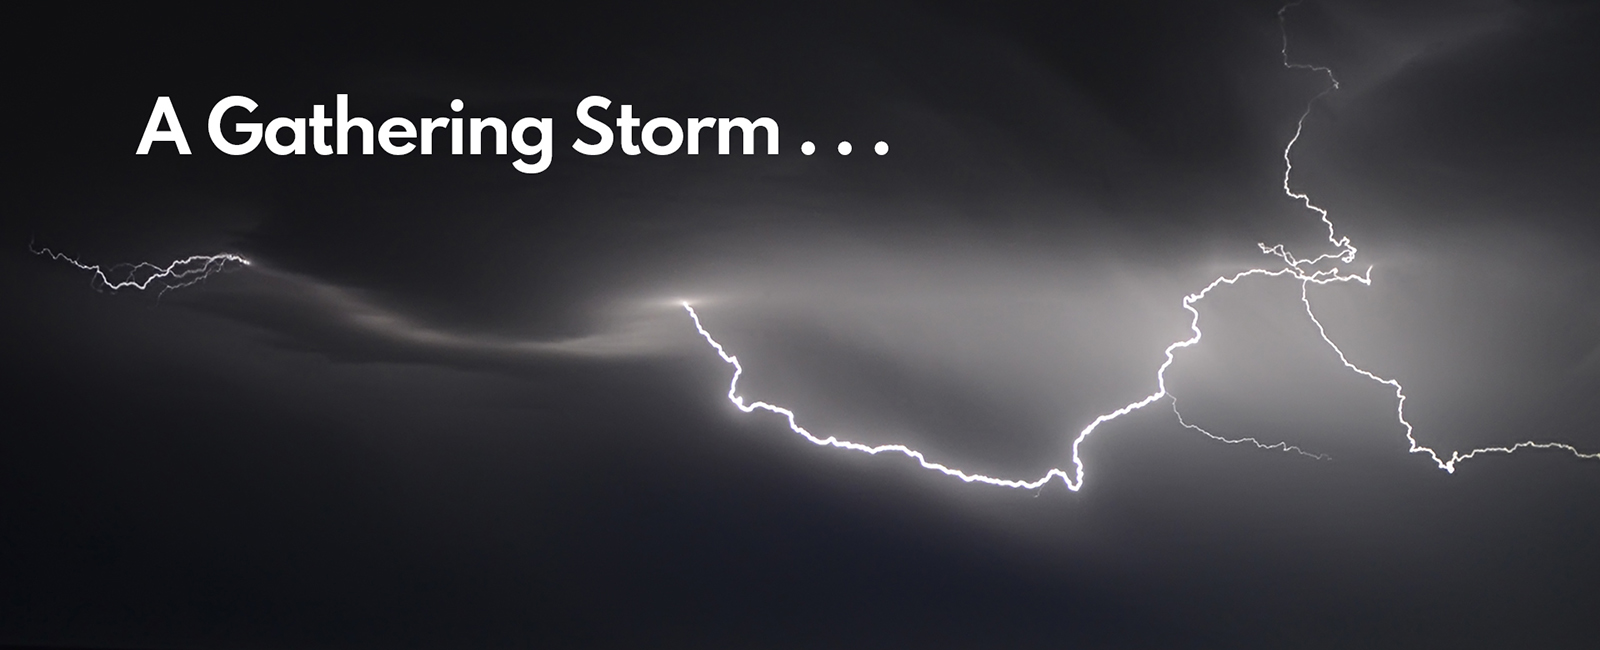 Lightning Storm Image